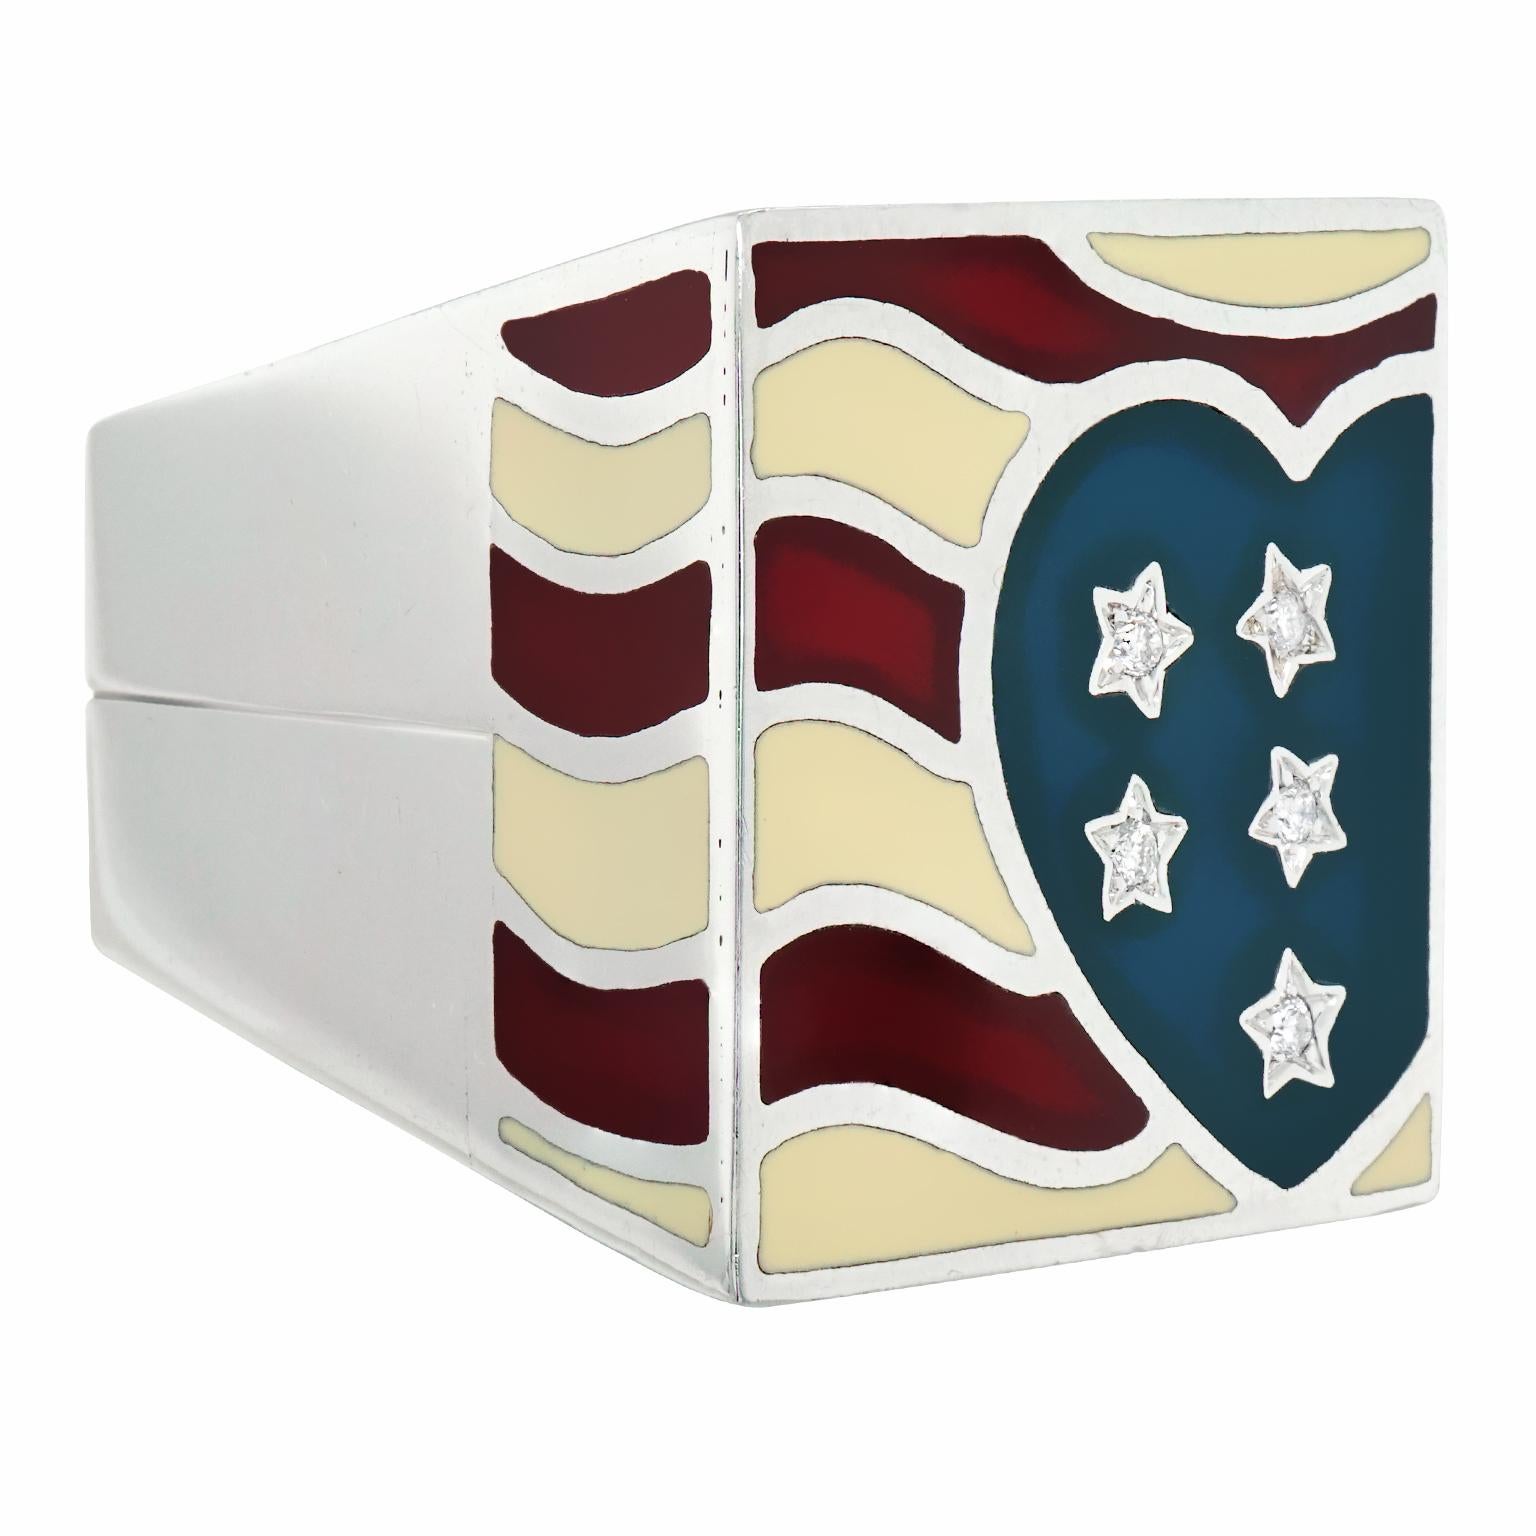 Modernist Pop Art American Flag Ring by La Nouvelle Bague